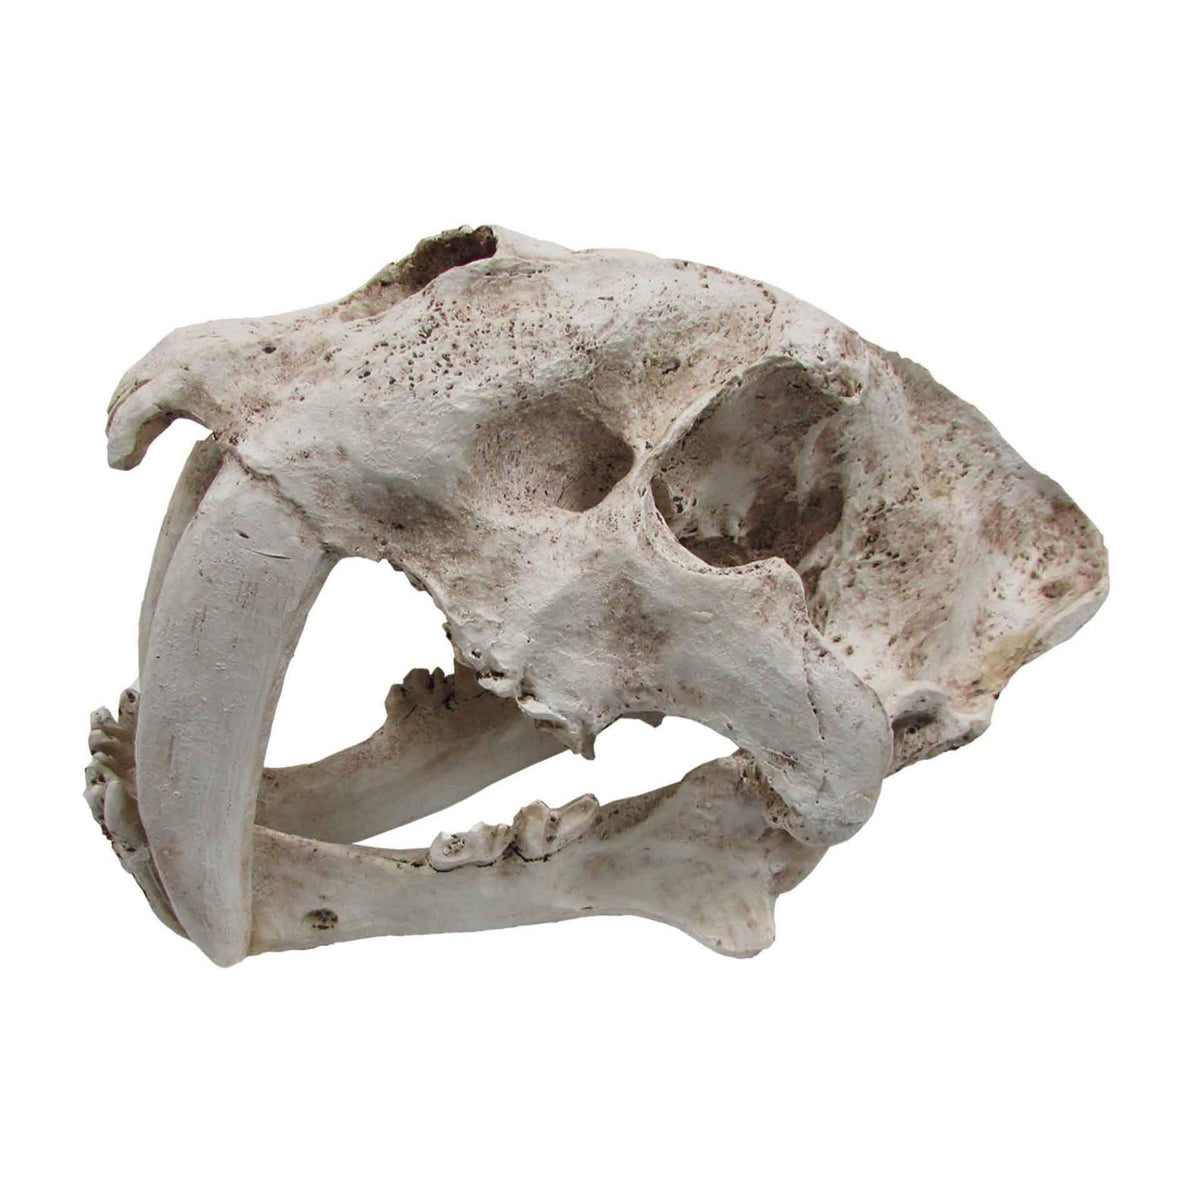 Sabre Tooth Skull - 34 x 19 x 20cm